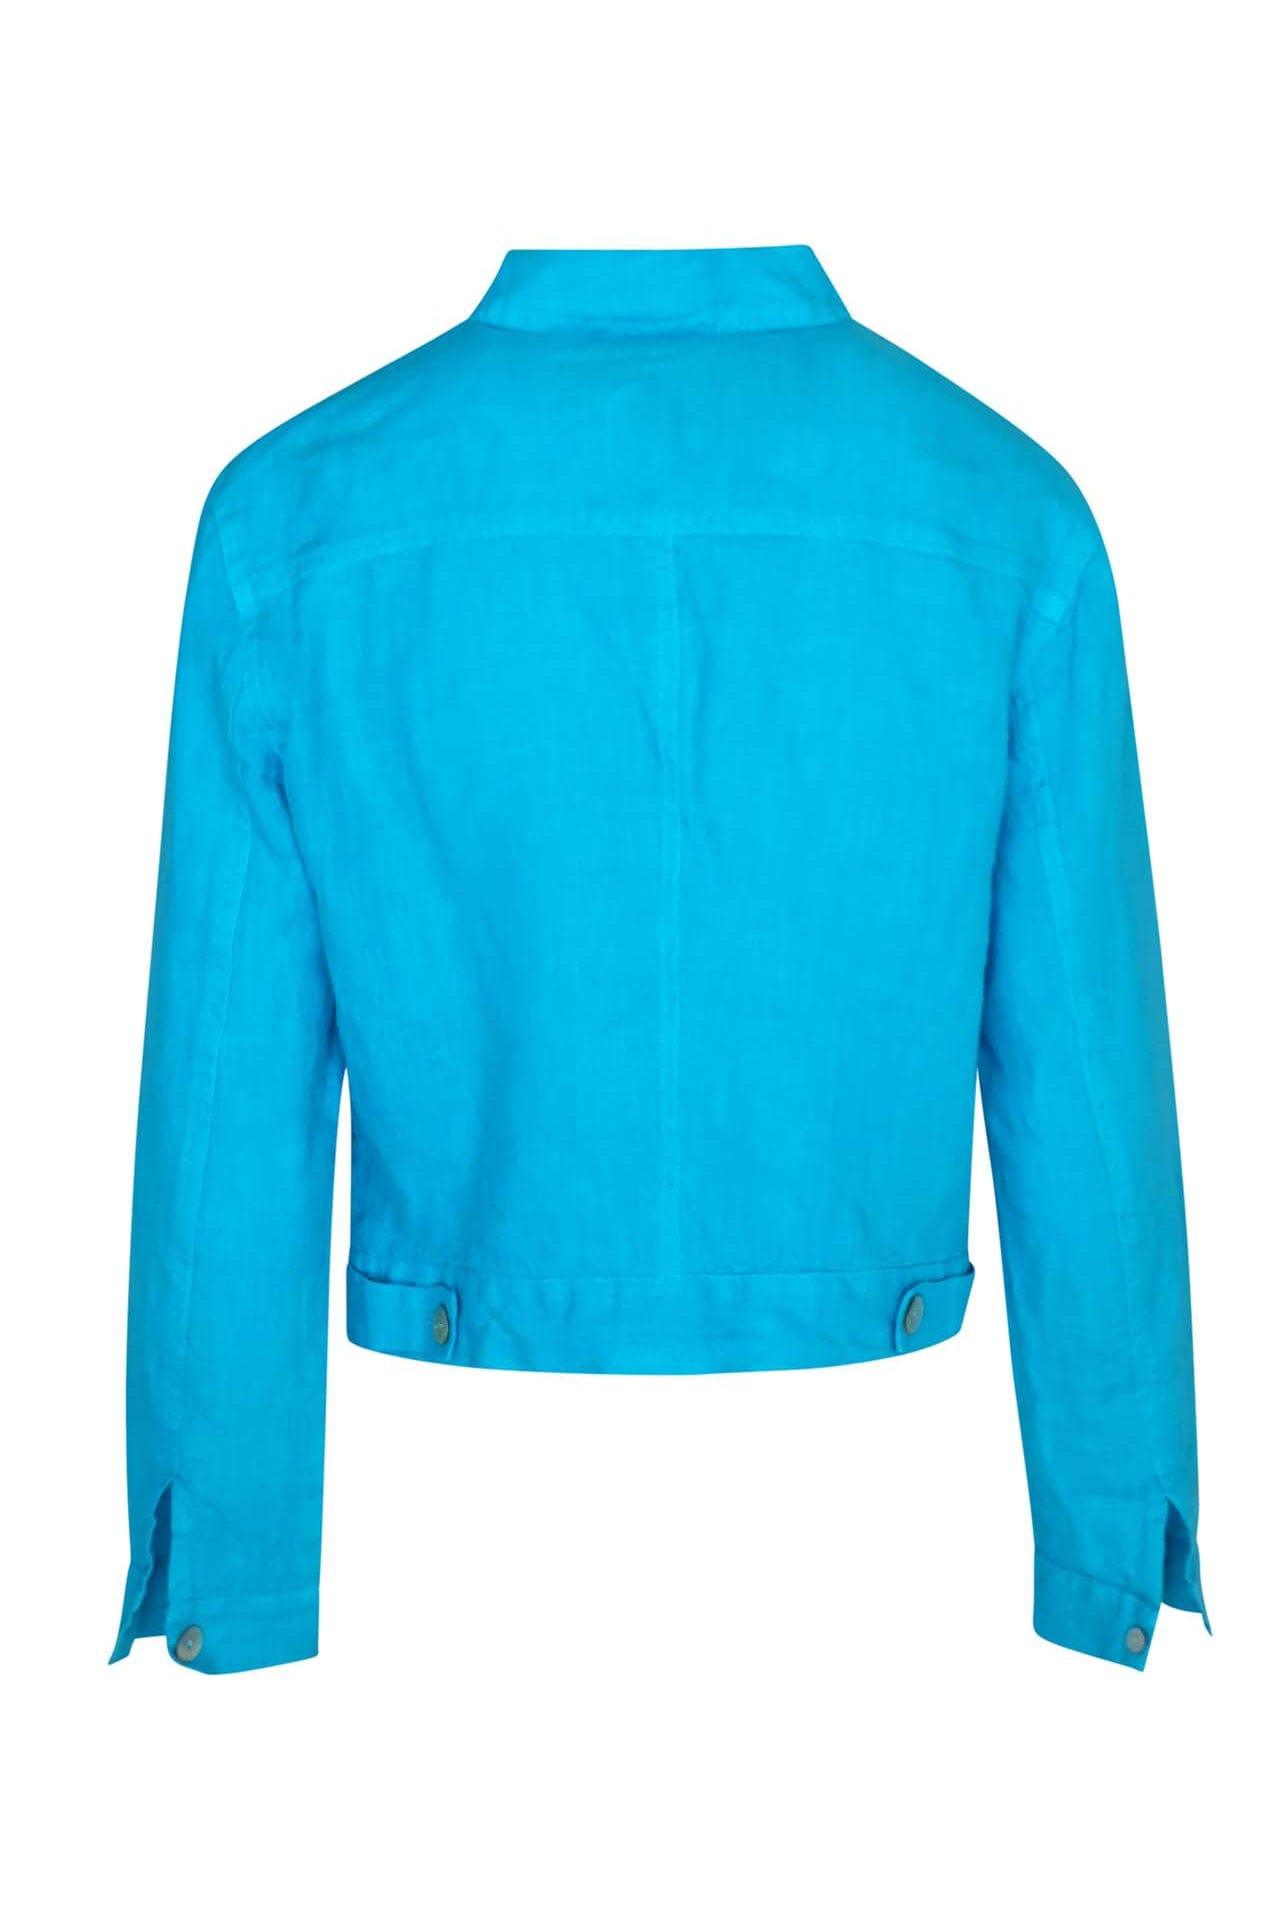 Haris Cotton Jackets Denim Jacket in Zante Blue Linen